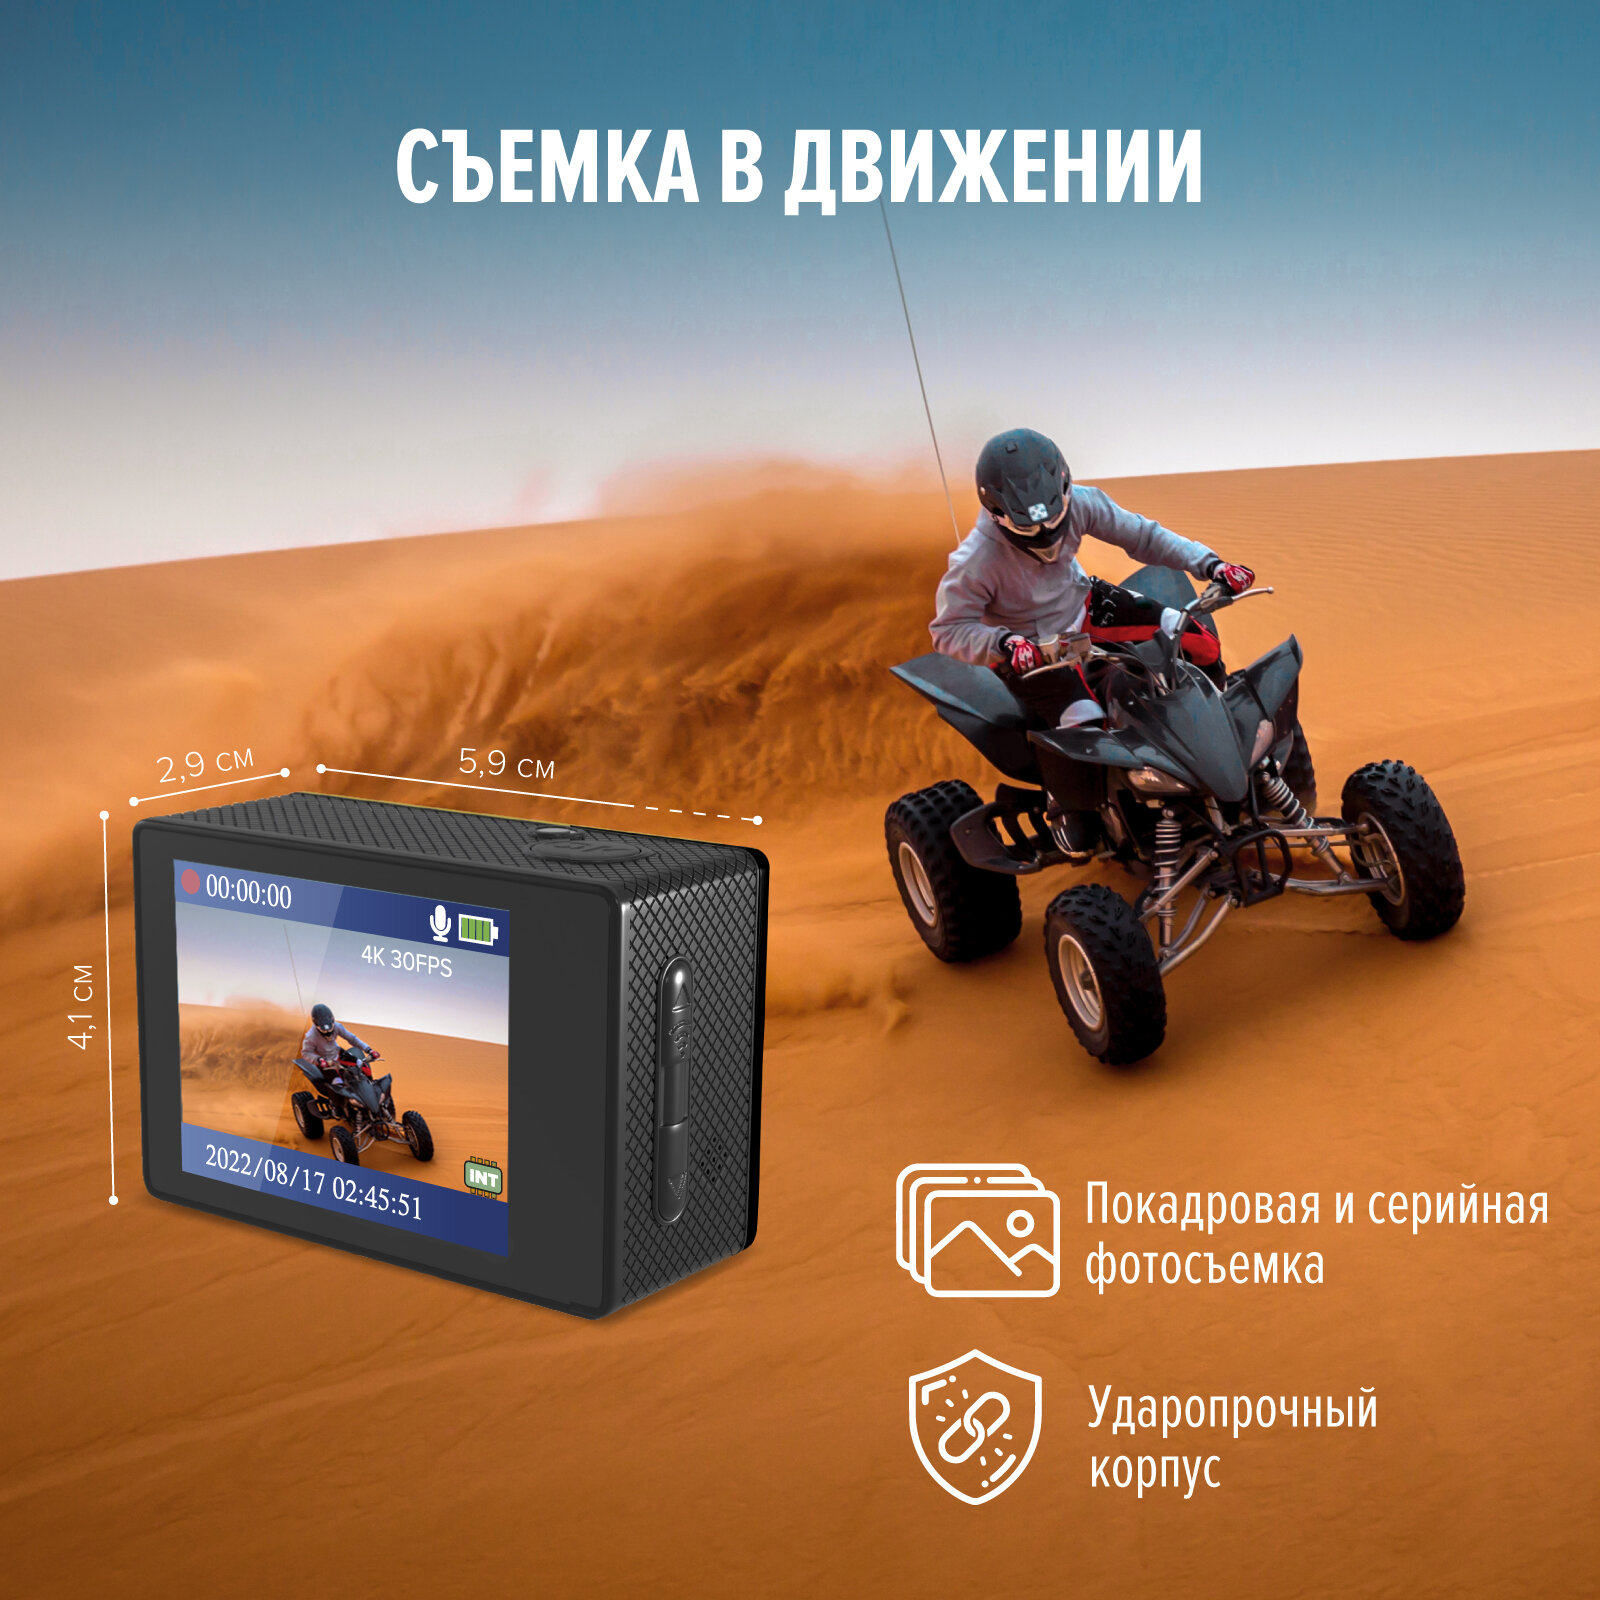 Экшн-камера Electerra 4К 1080p Ultra HD Экшен камера черная